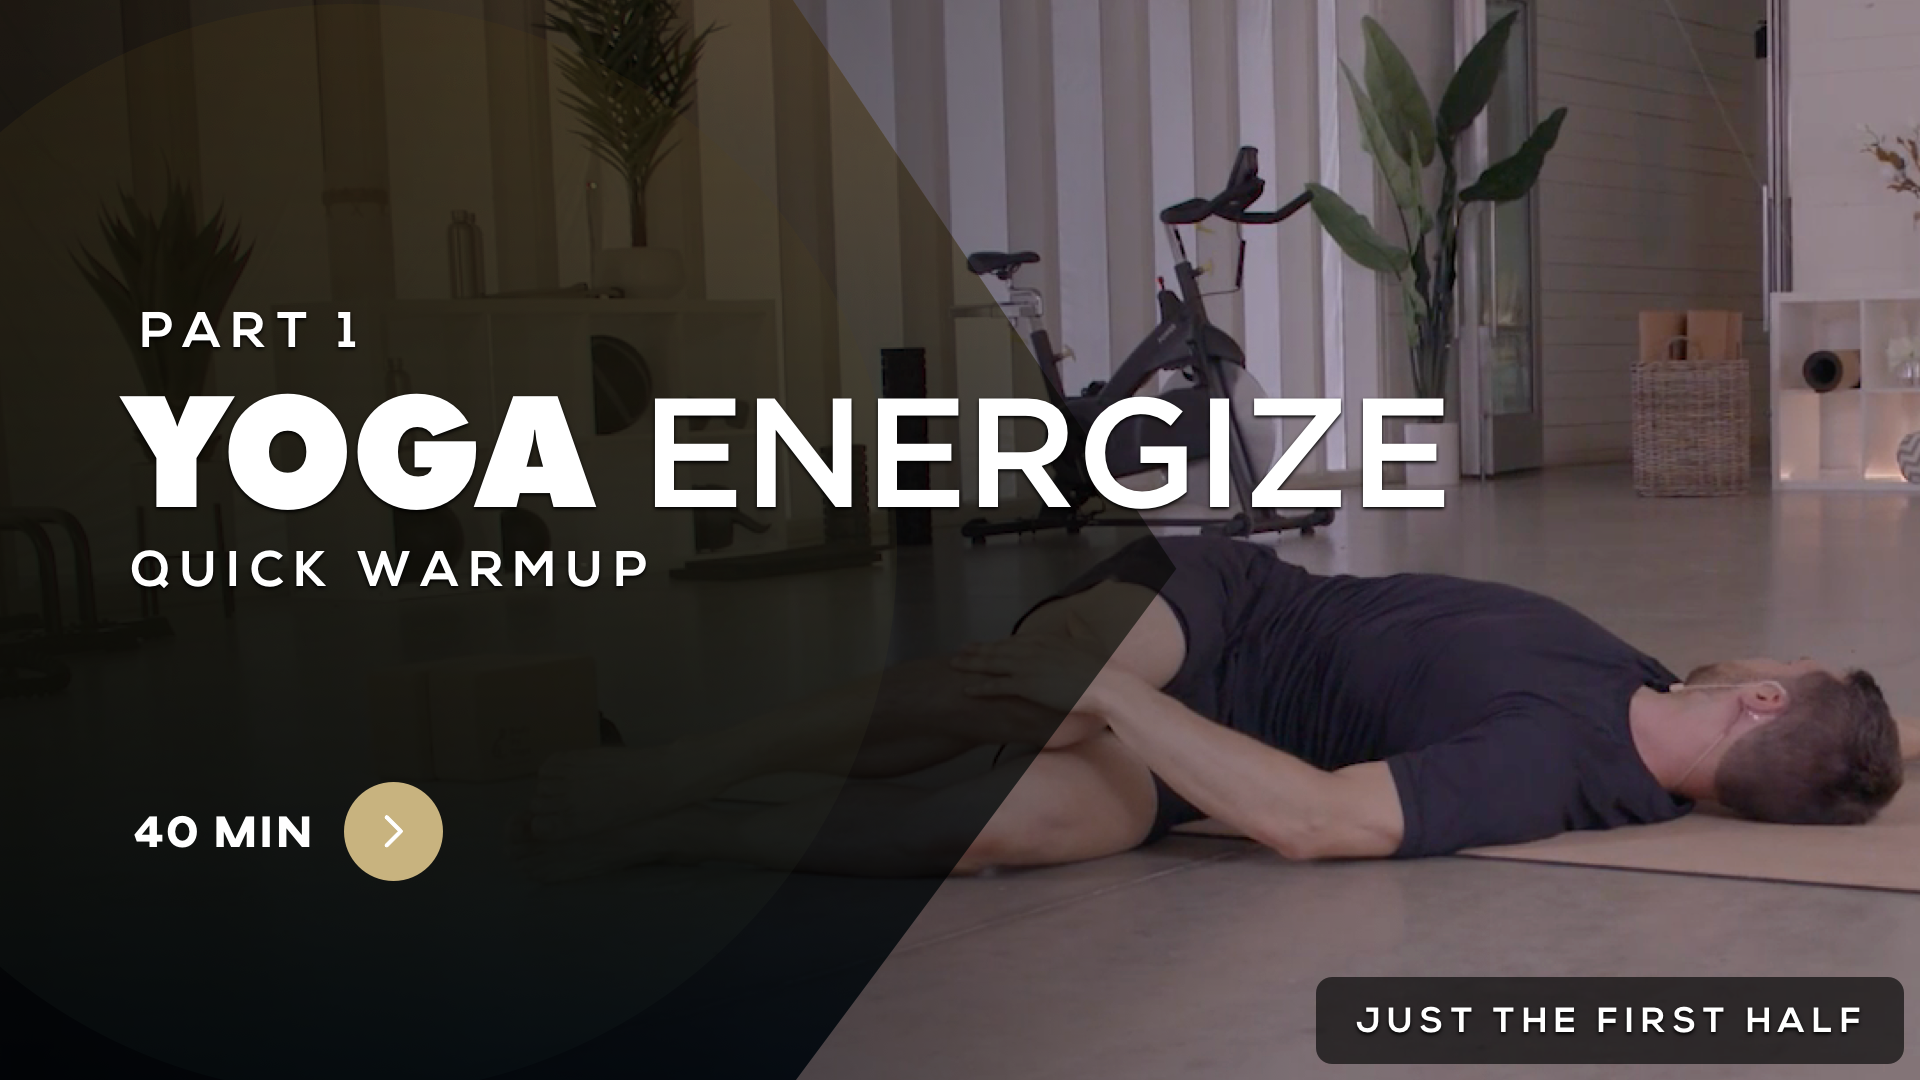 Yoga For Energy